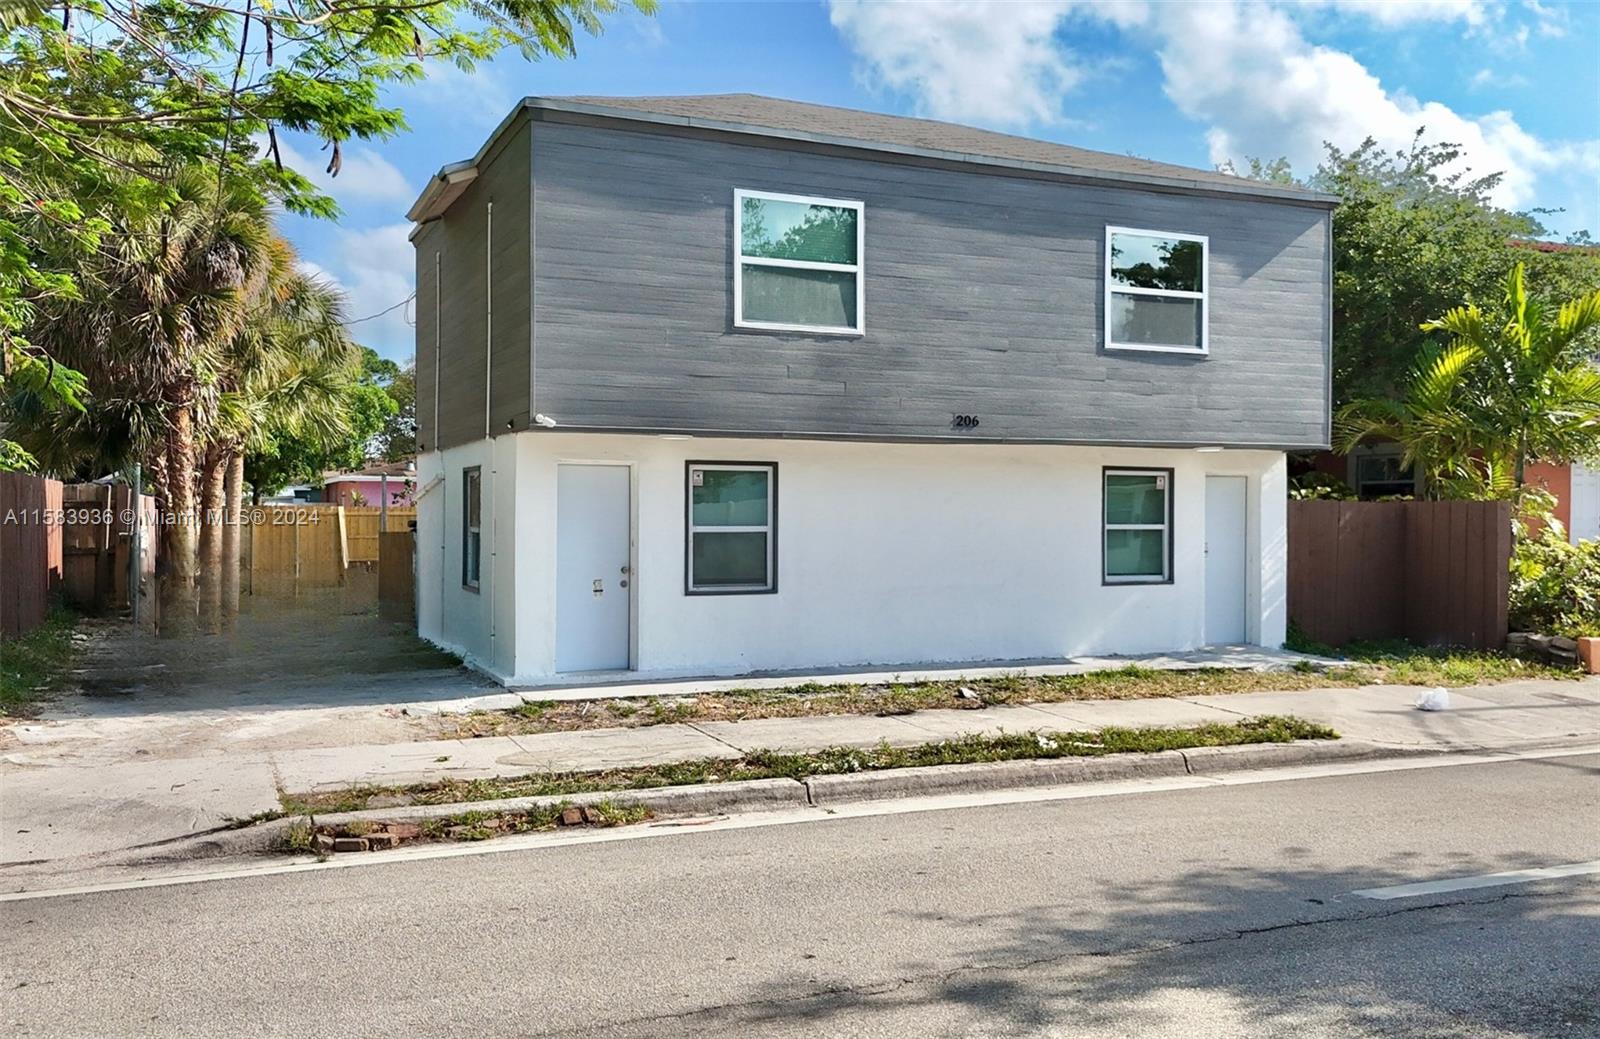 Rental Property at 206 Ne 13th St St, Fort Lauderdale, Broward County, Florida -  - $800,000 MO.